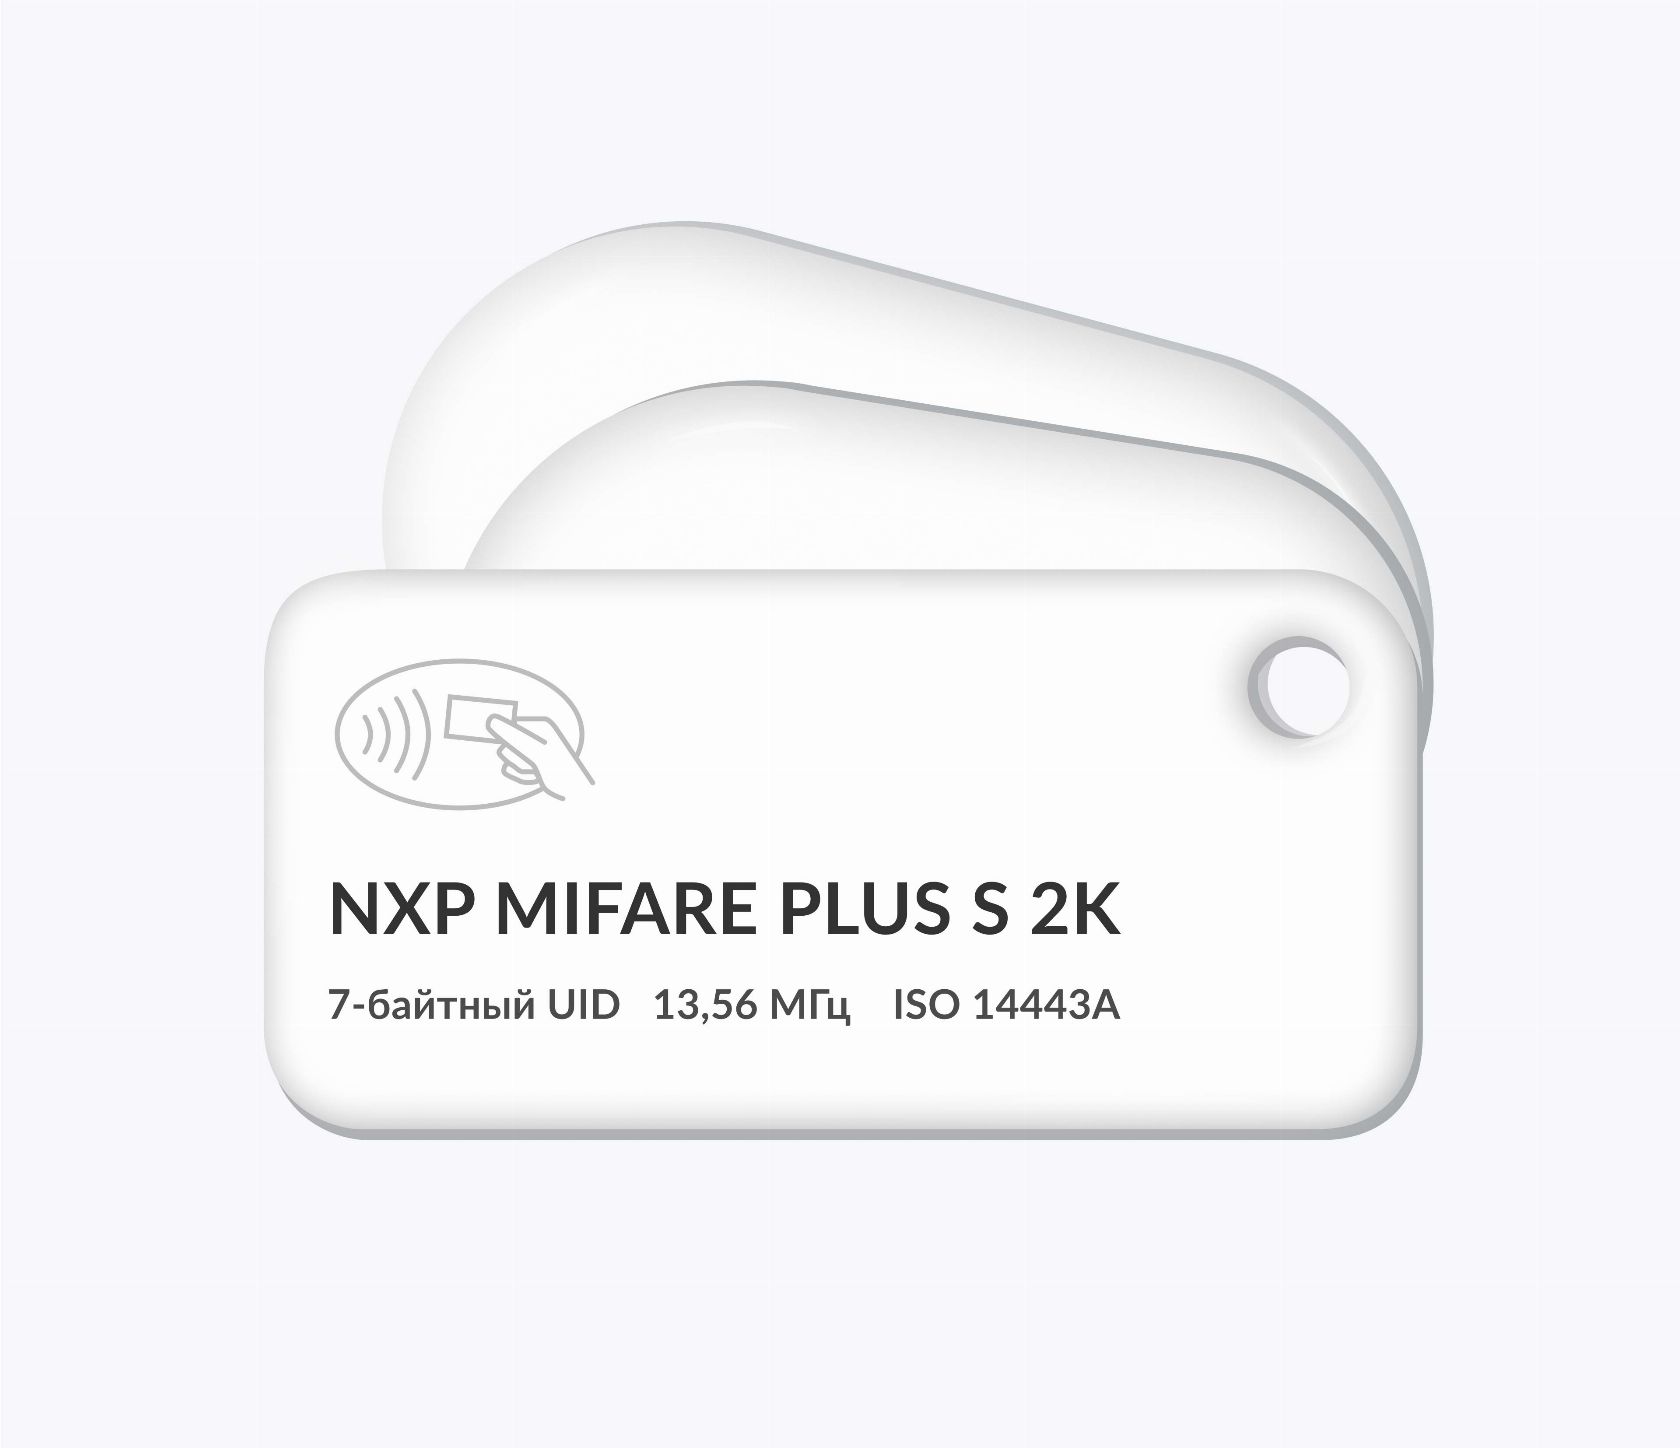 RFID-брелоки NEOKEY® с чипом NXP MIFARE Plus S 2k 7 byte UID и вашим логотипом RFID-брелоки NEOKEY® с чипом NXP MIFARE Plus S 2k 7 byte UID и вашим логотипом